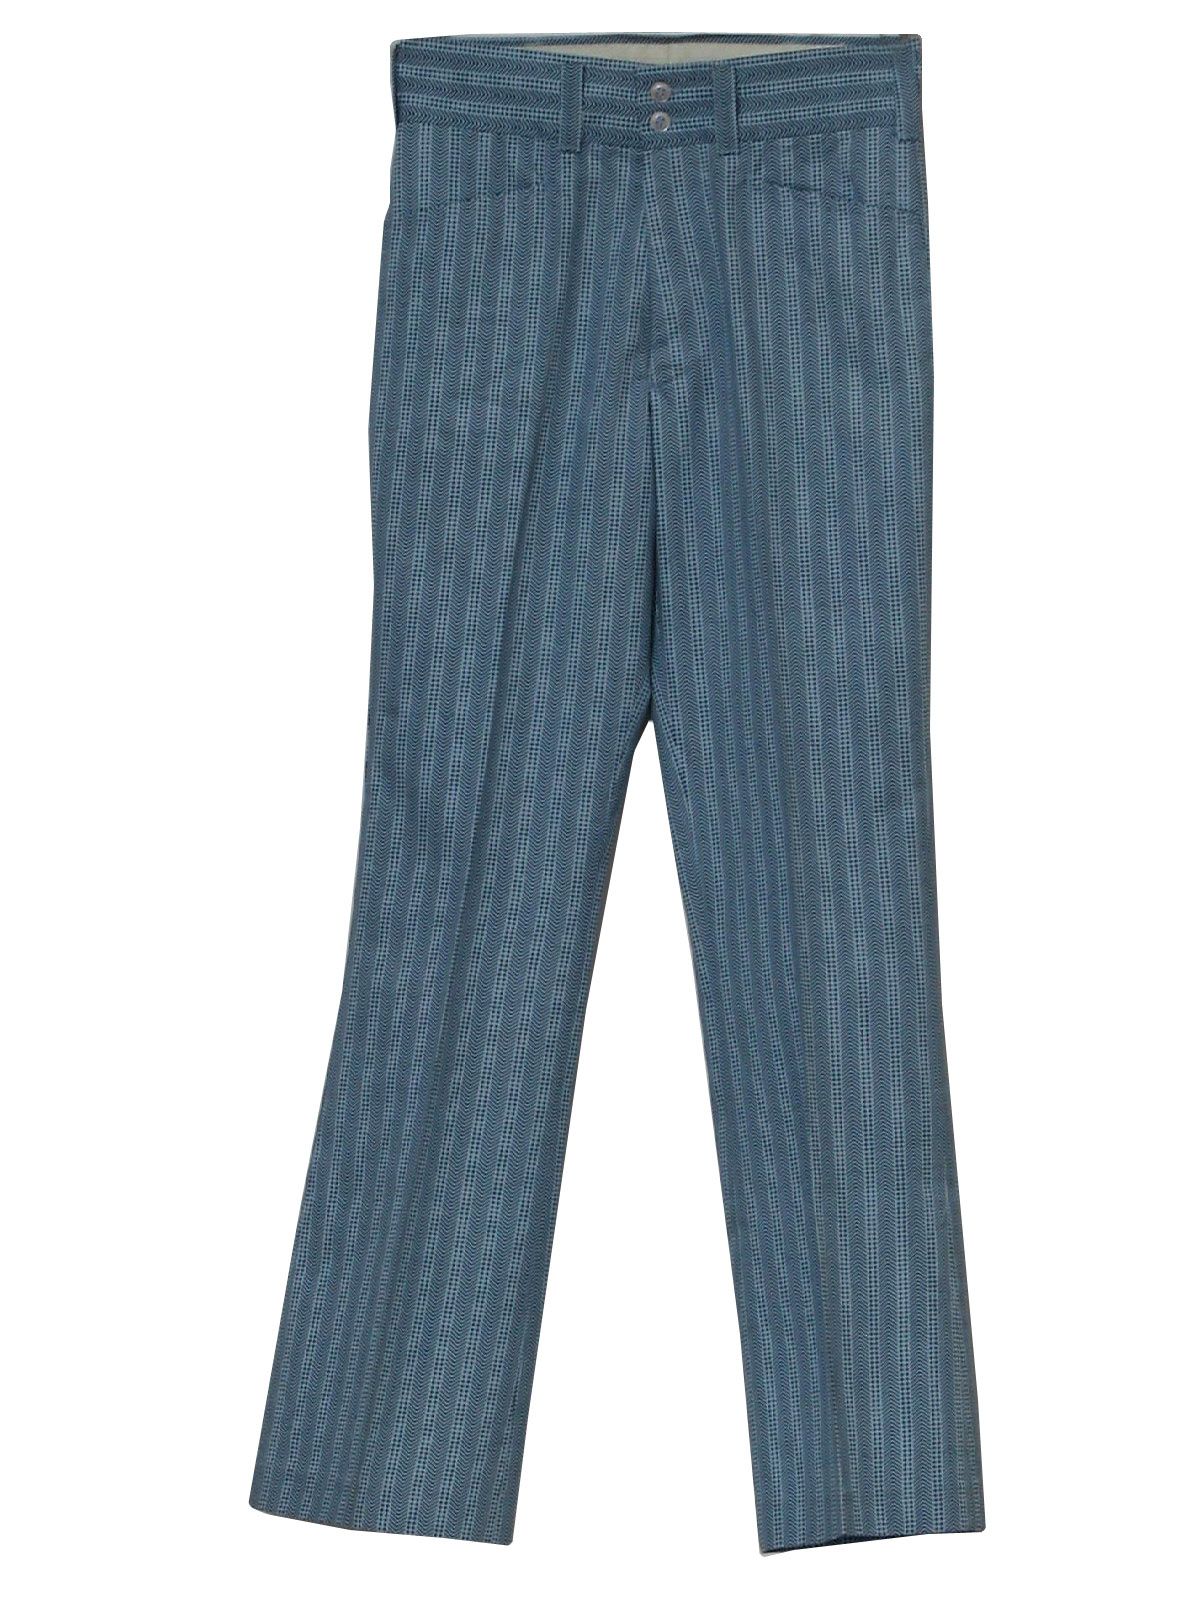 Vintage 1960's Flared Pants / Flares: 60s -Koratron- Mens shaded blue ...